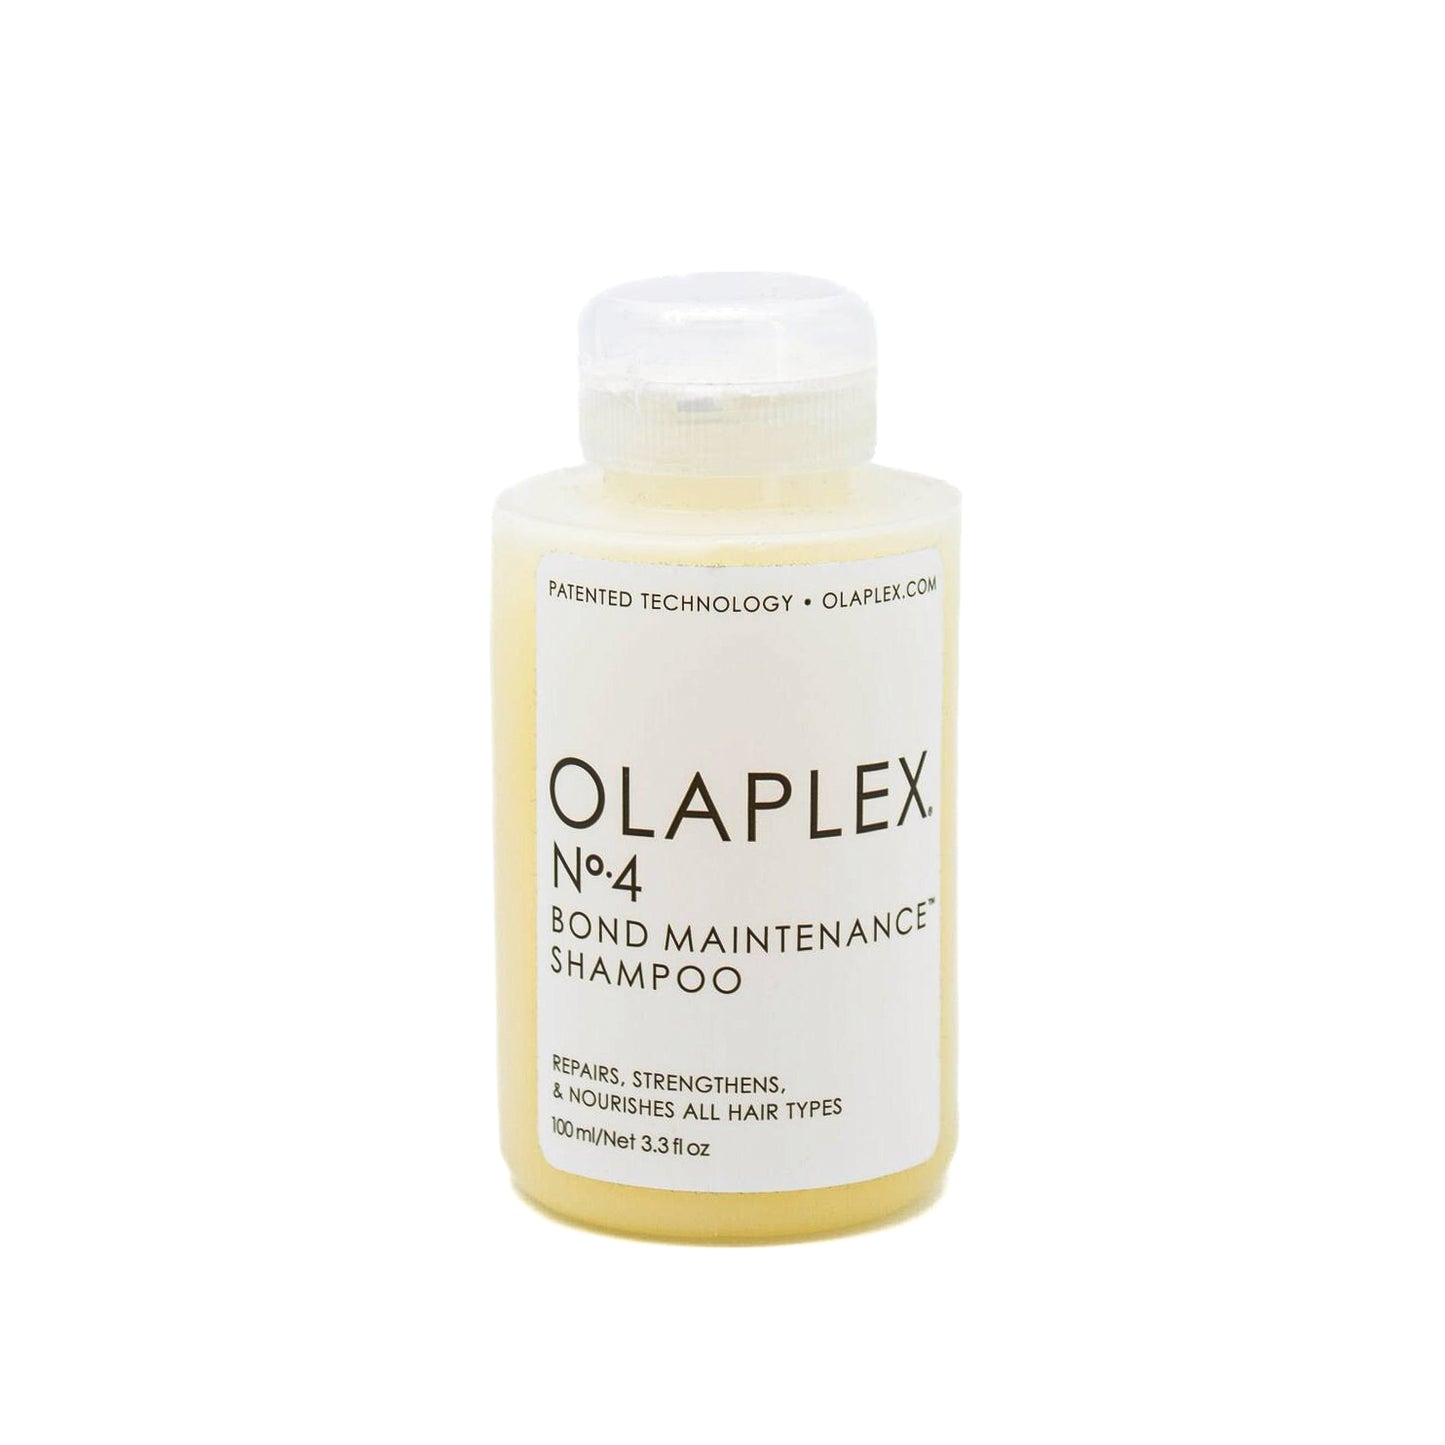 Olaplex No. 4 Bond Maintenance Shampoo 3.3oz - New